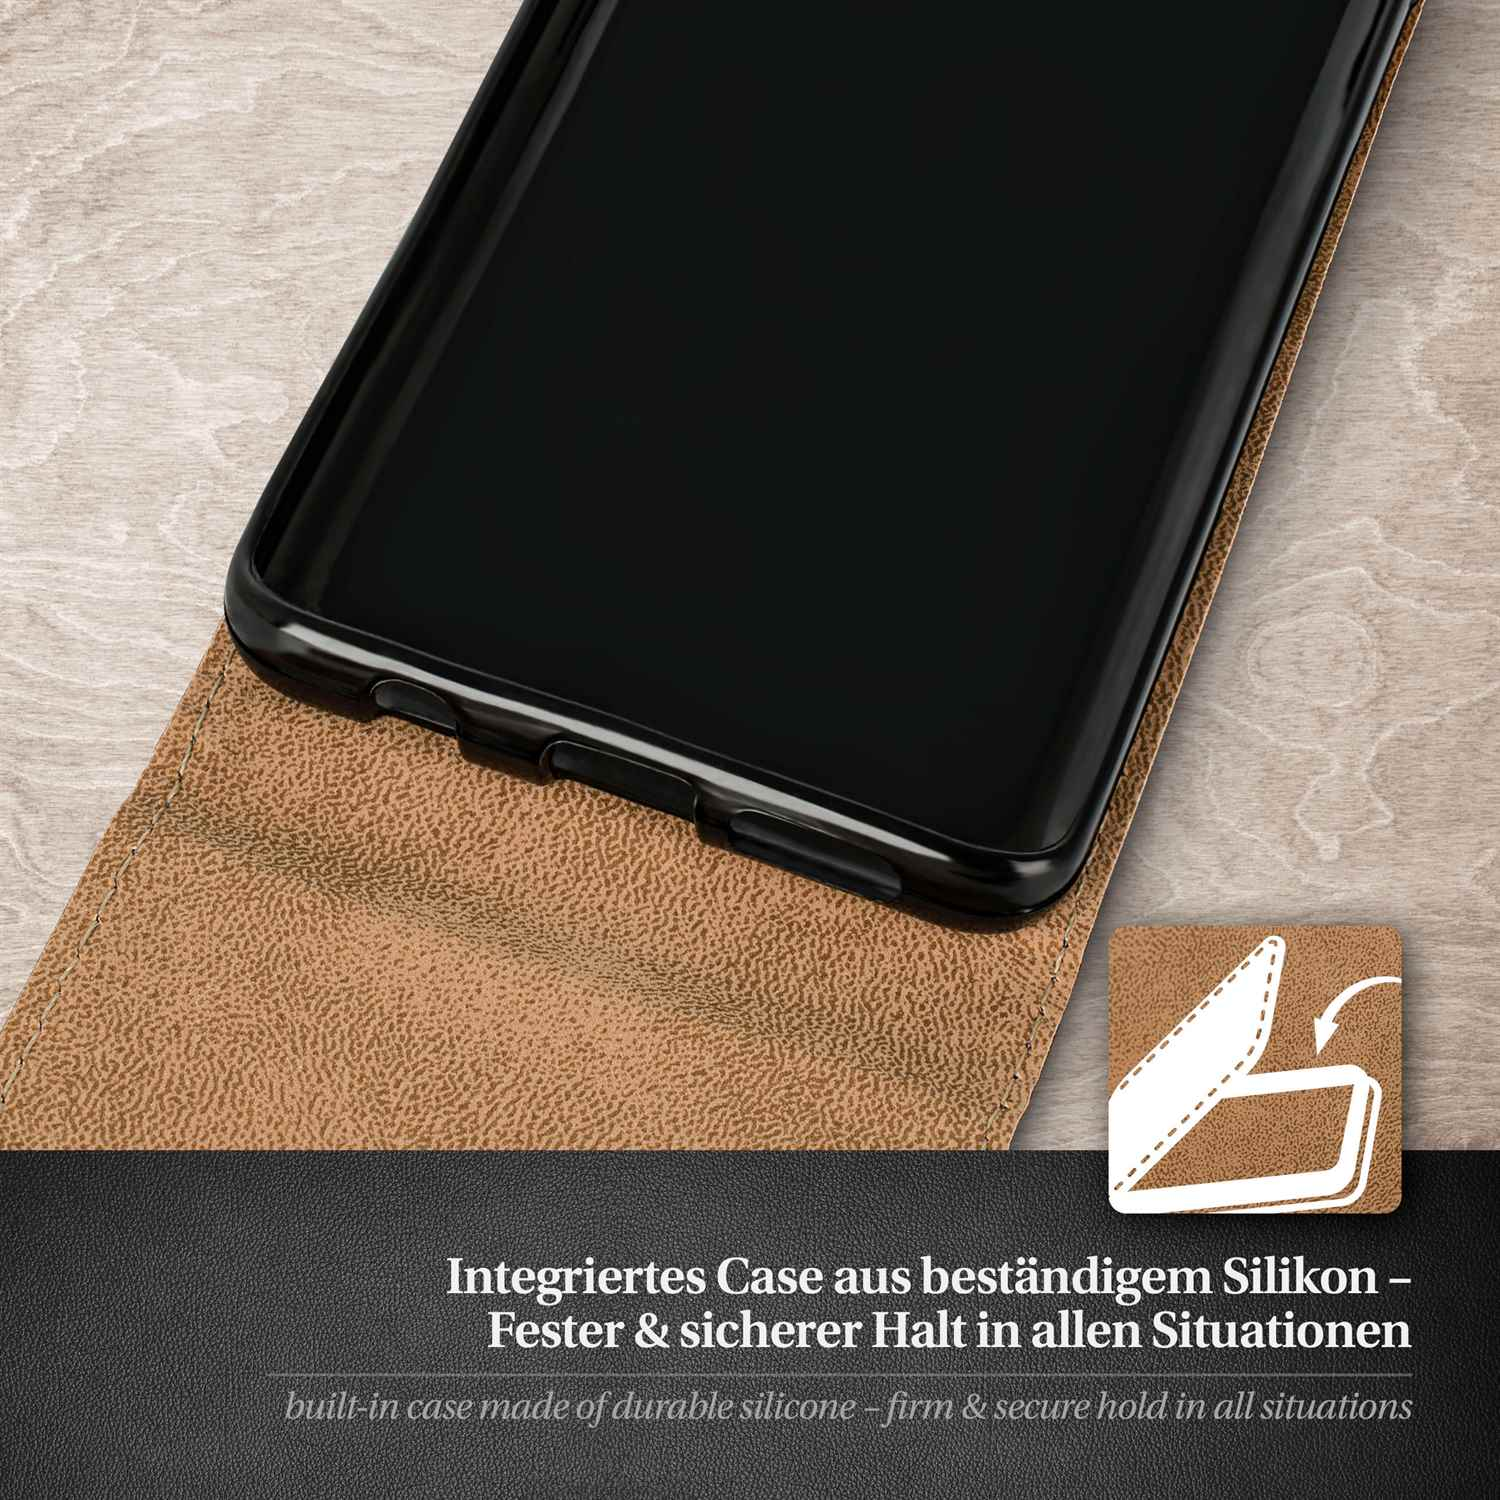 MOEX Flip Case, Flip S3, Galaxy Samsung, Cover, Berry-Fuchsia